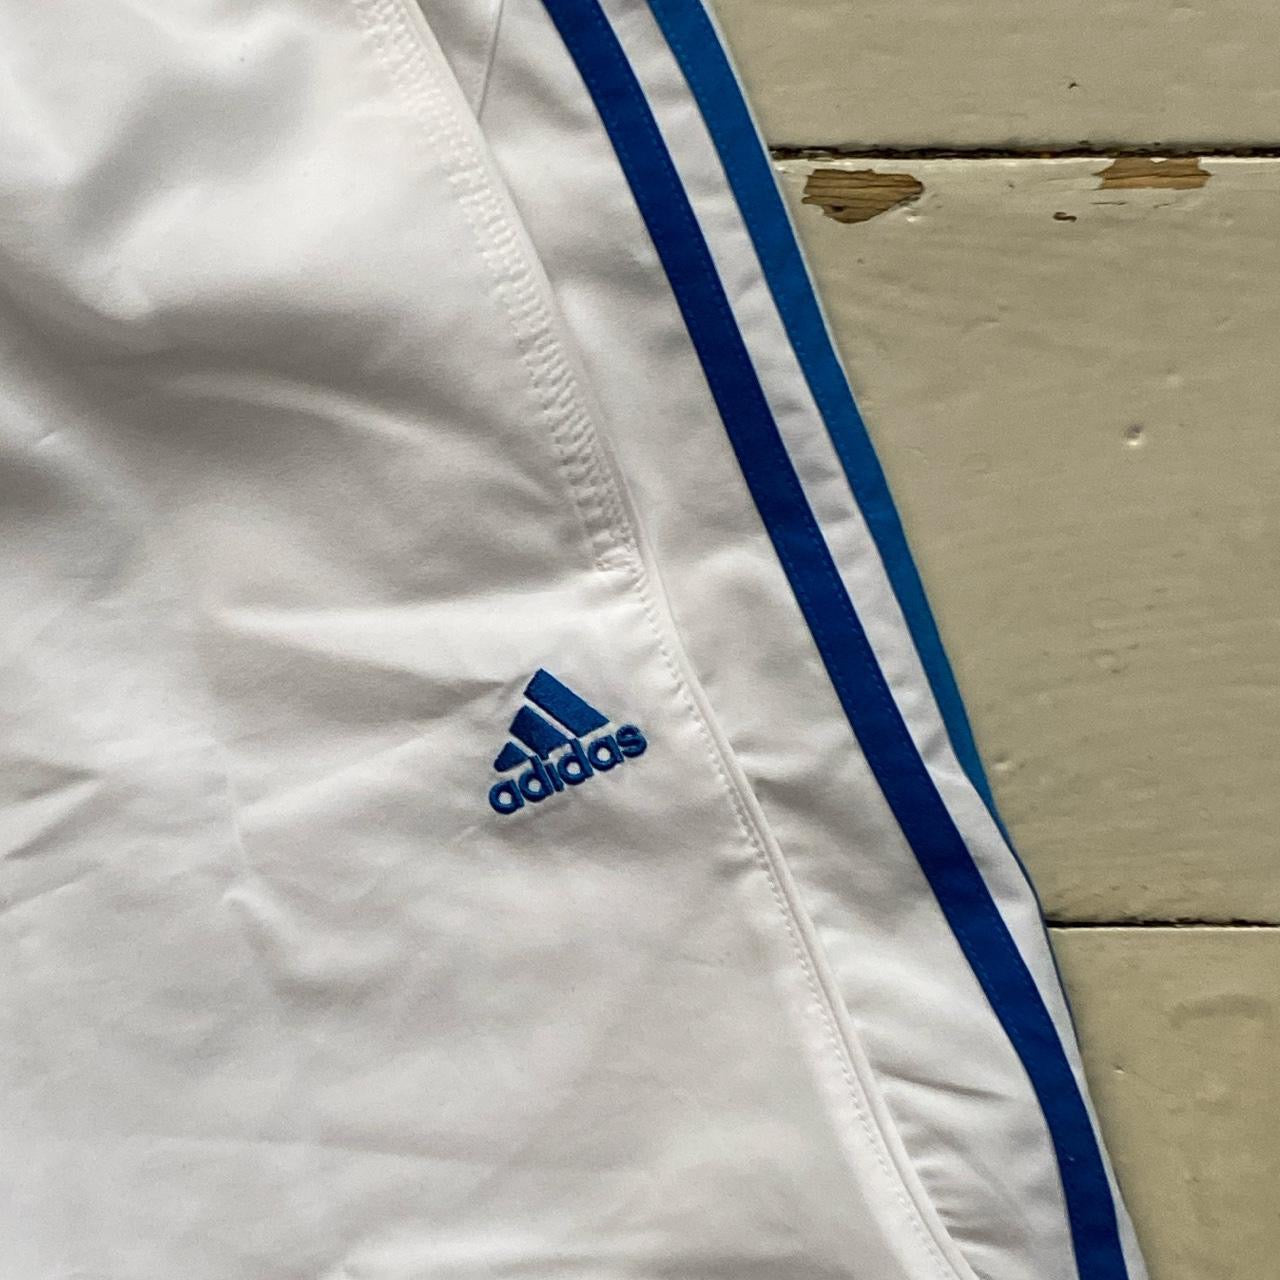 Adidas White Shell Shorts (Medium)